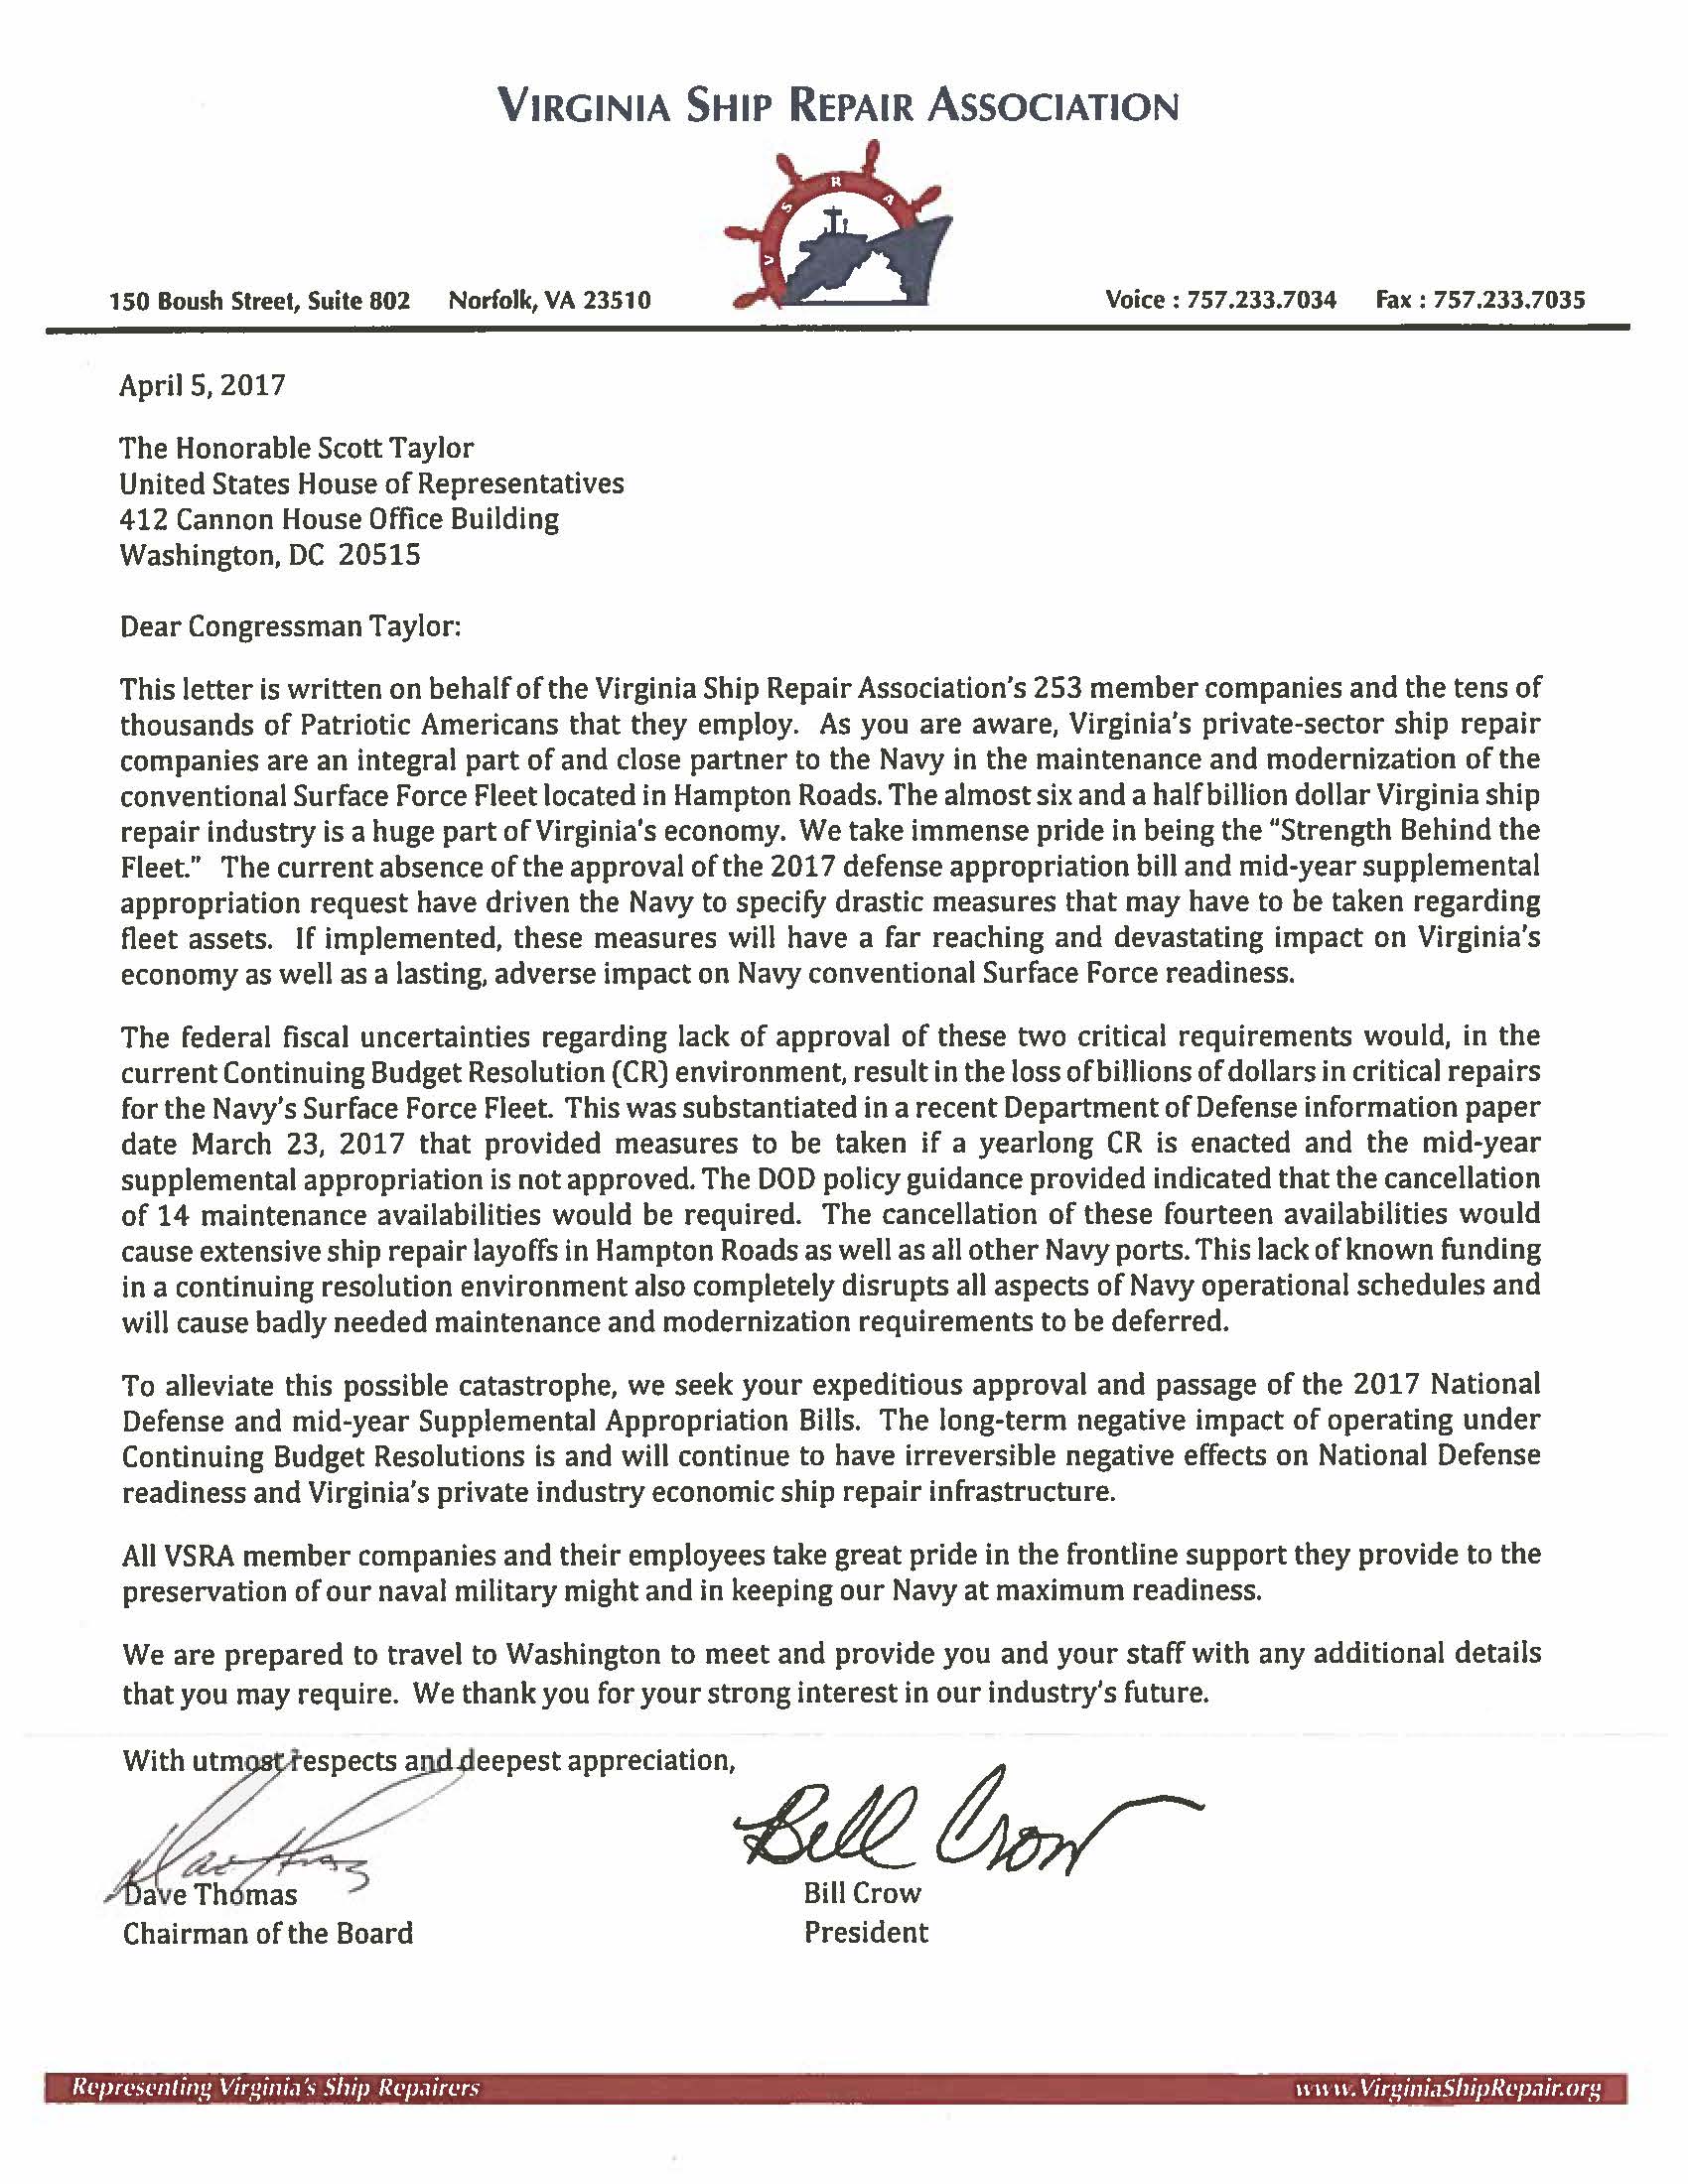 Scott Taylor Congressional Letter